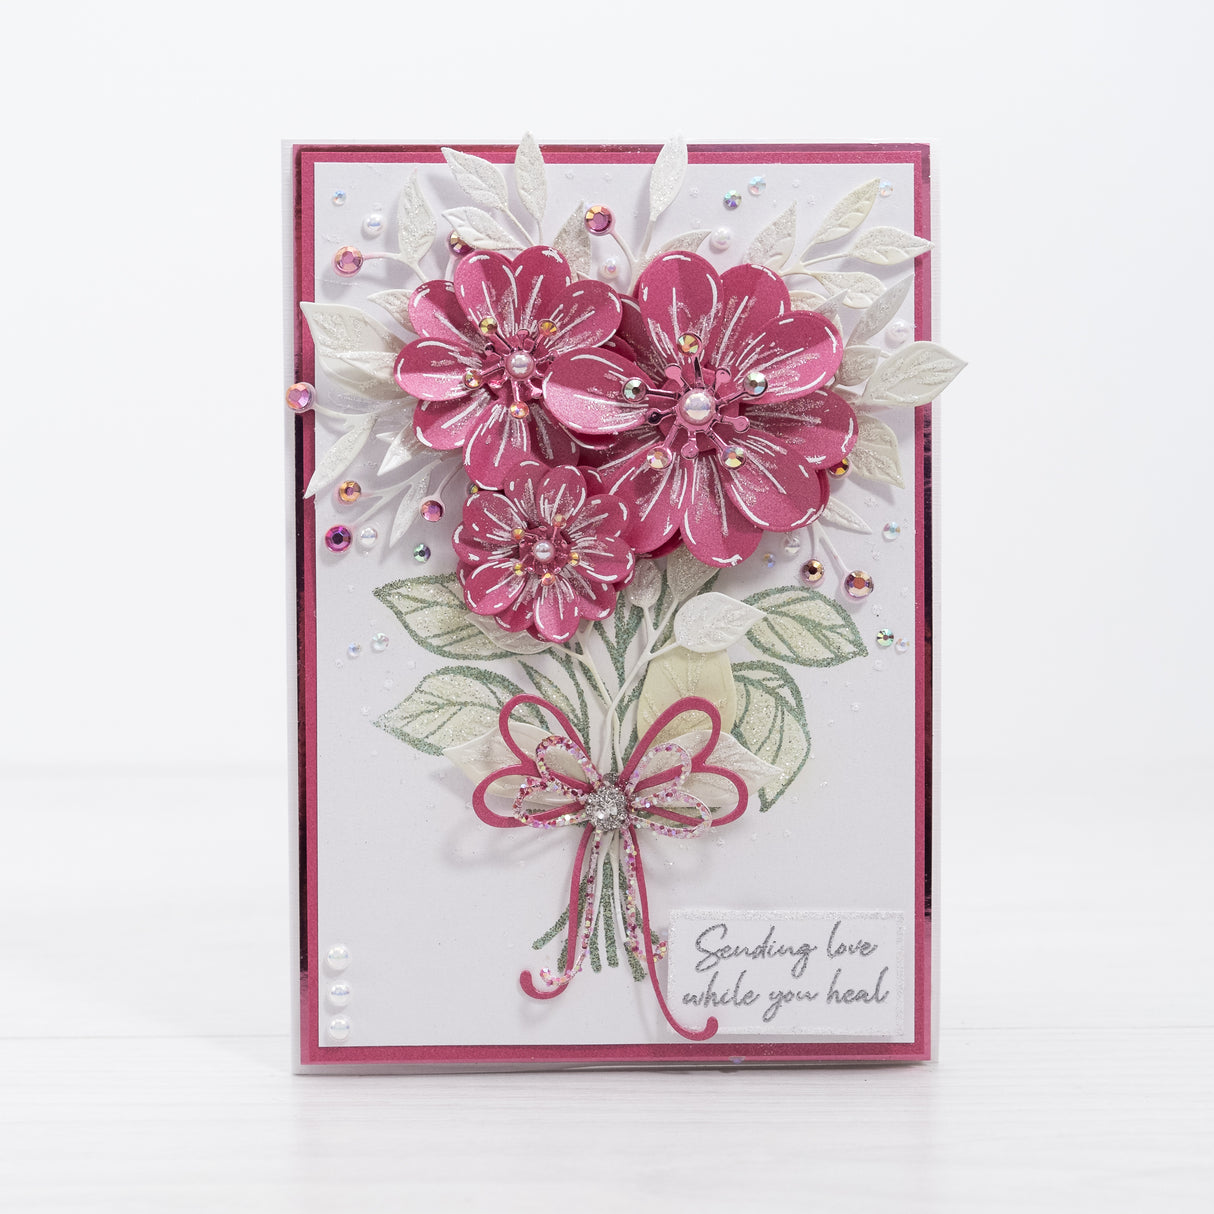 Chloes Creative Cards Die & Stamp Set - Beautiful Bouquet Bloom